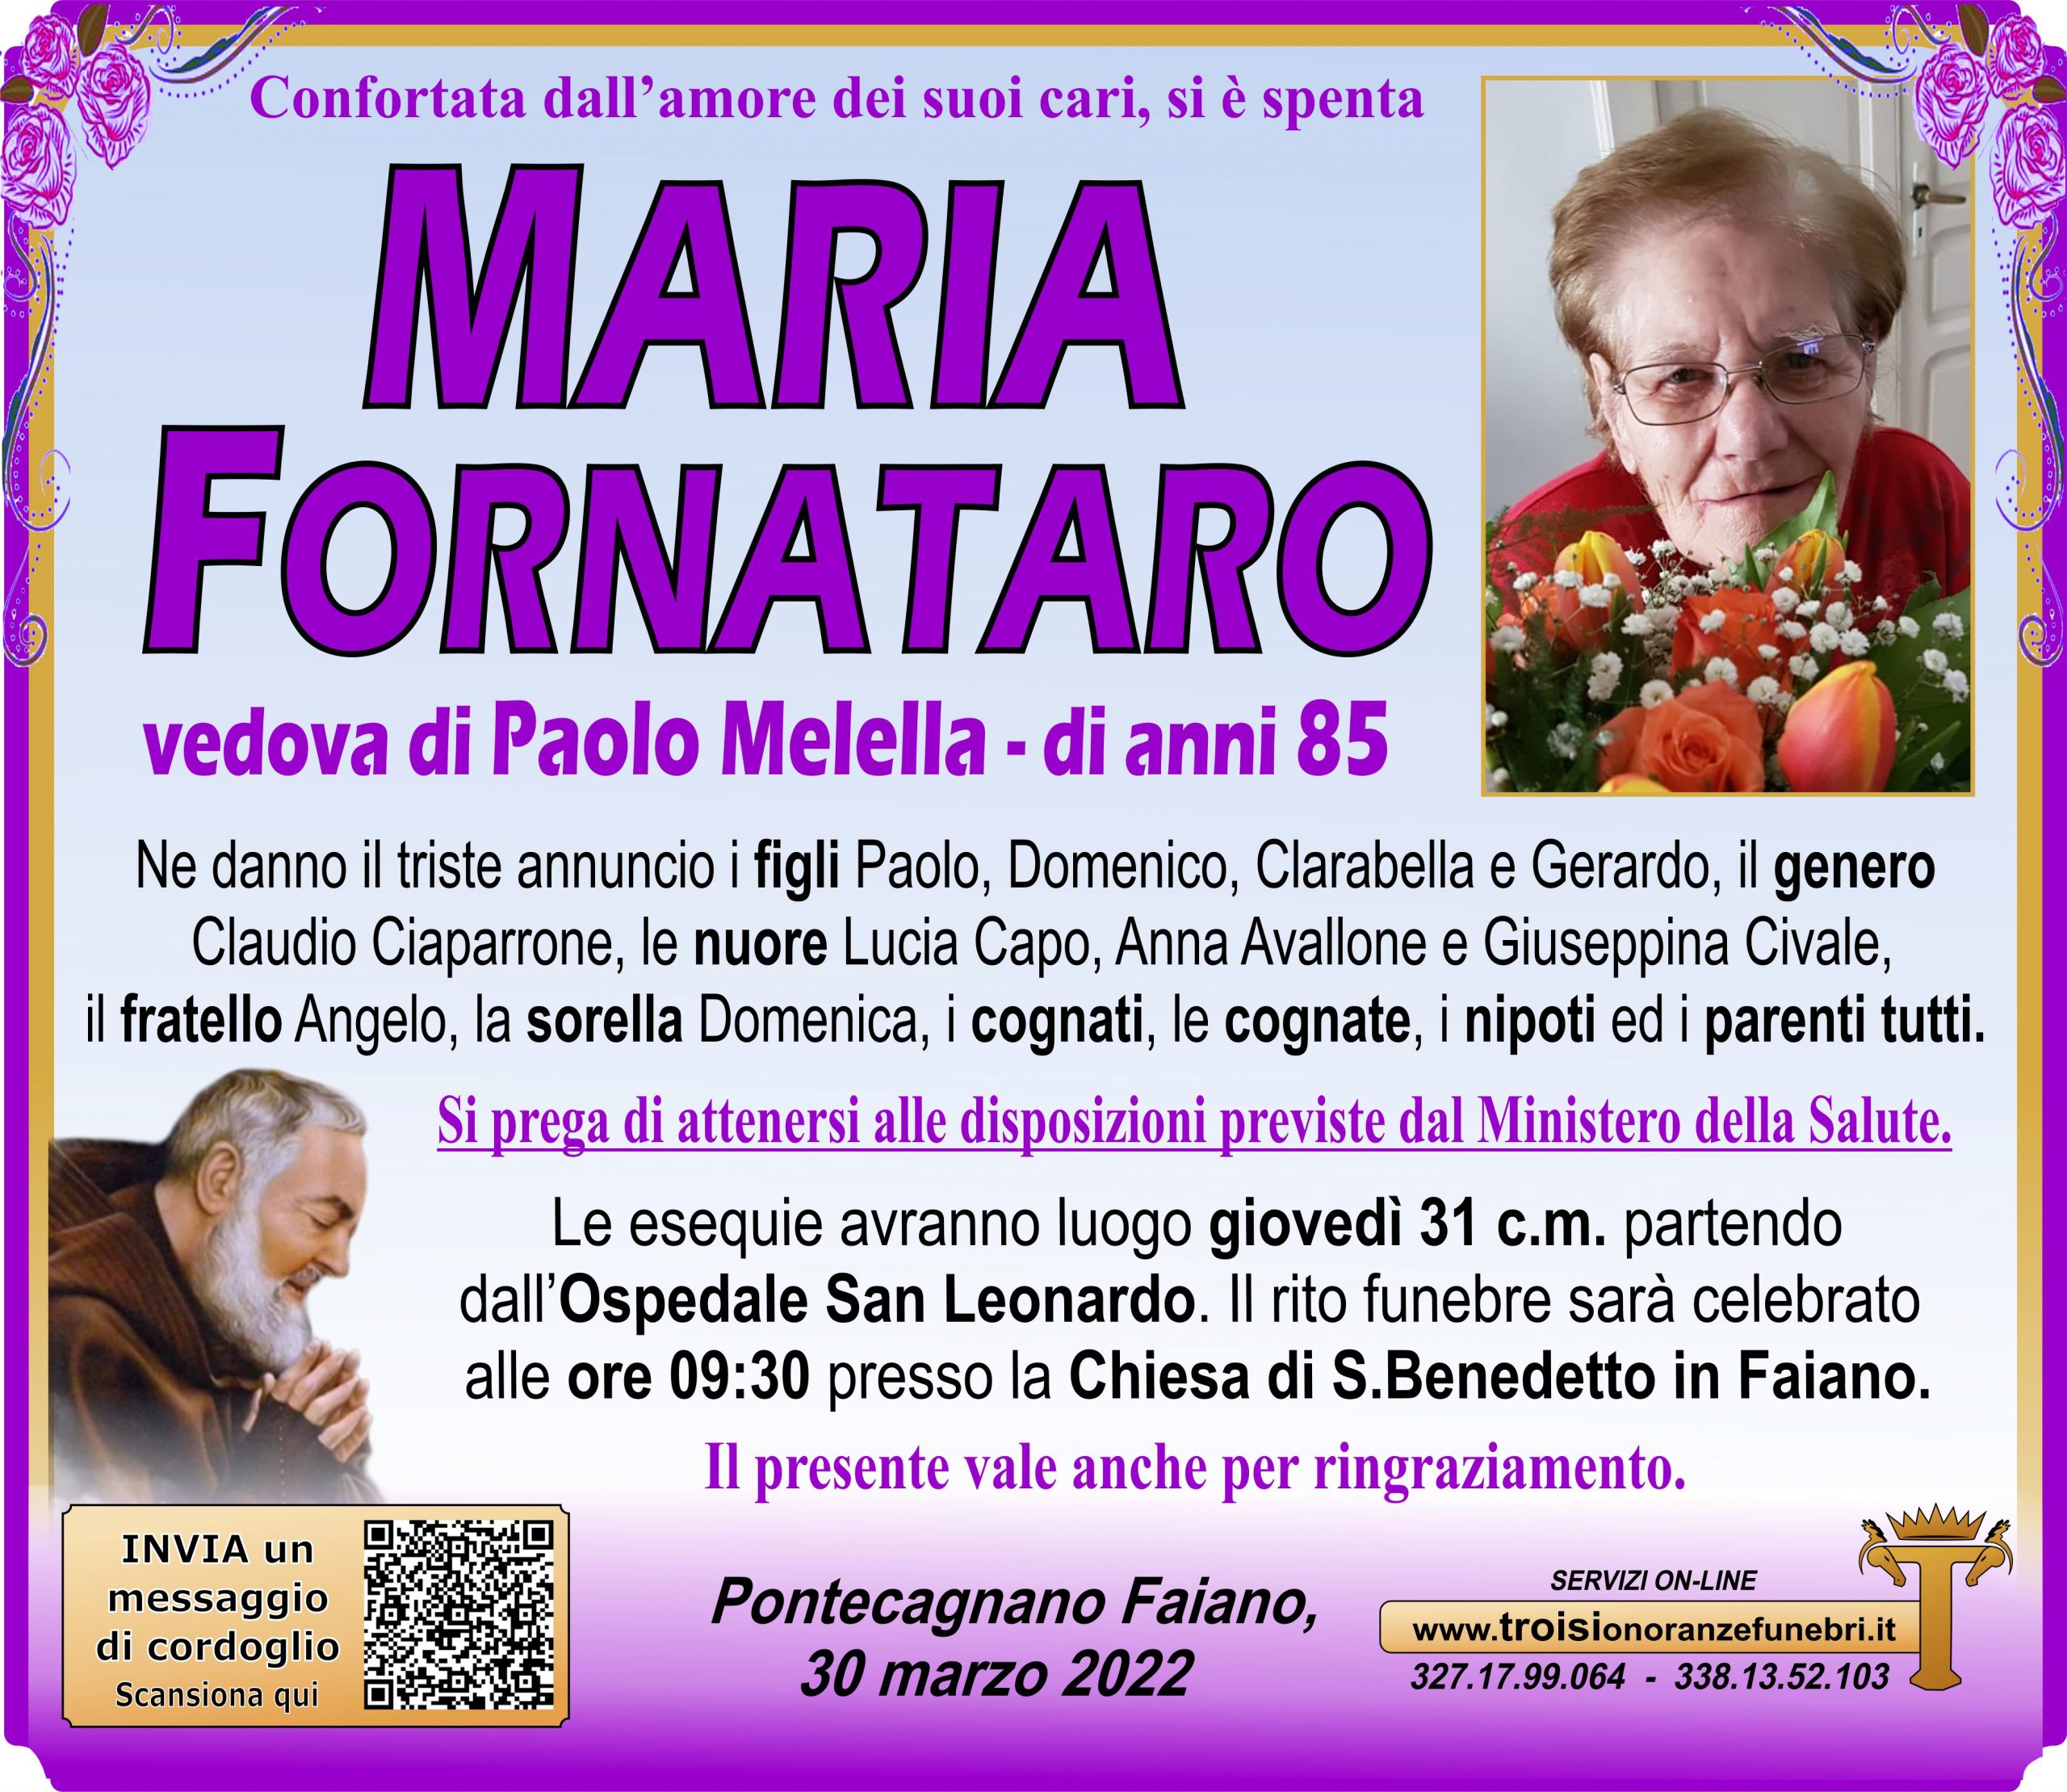 MARIA FORNATARO